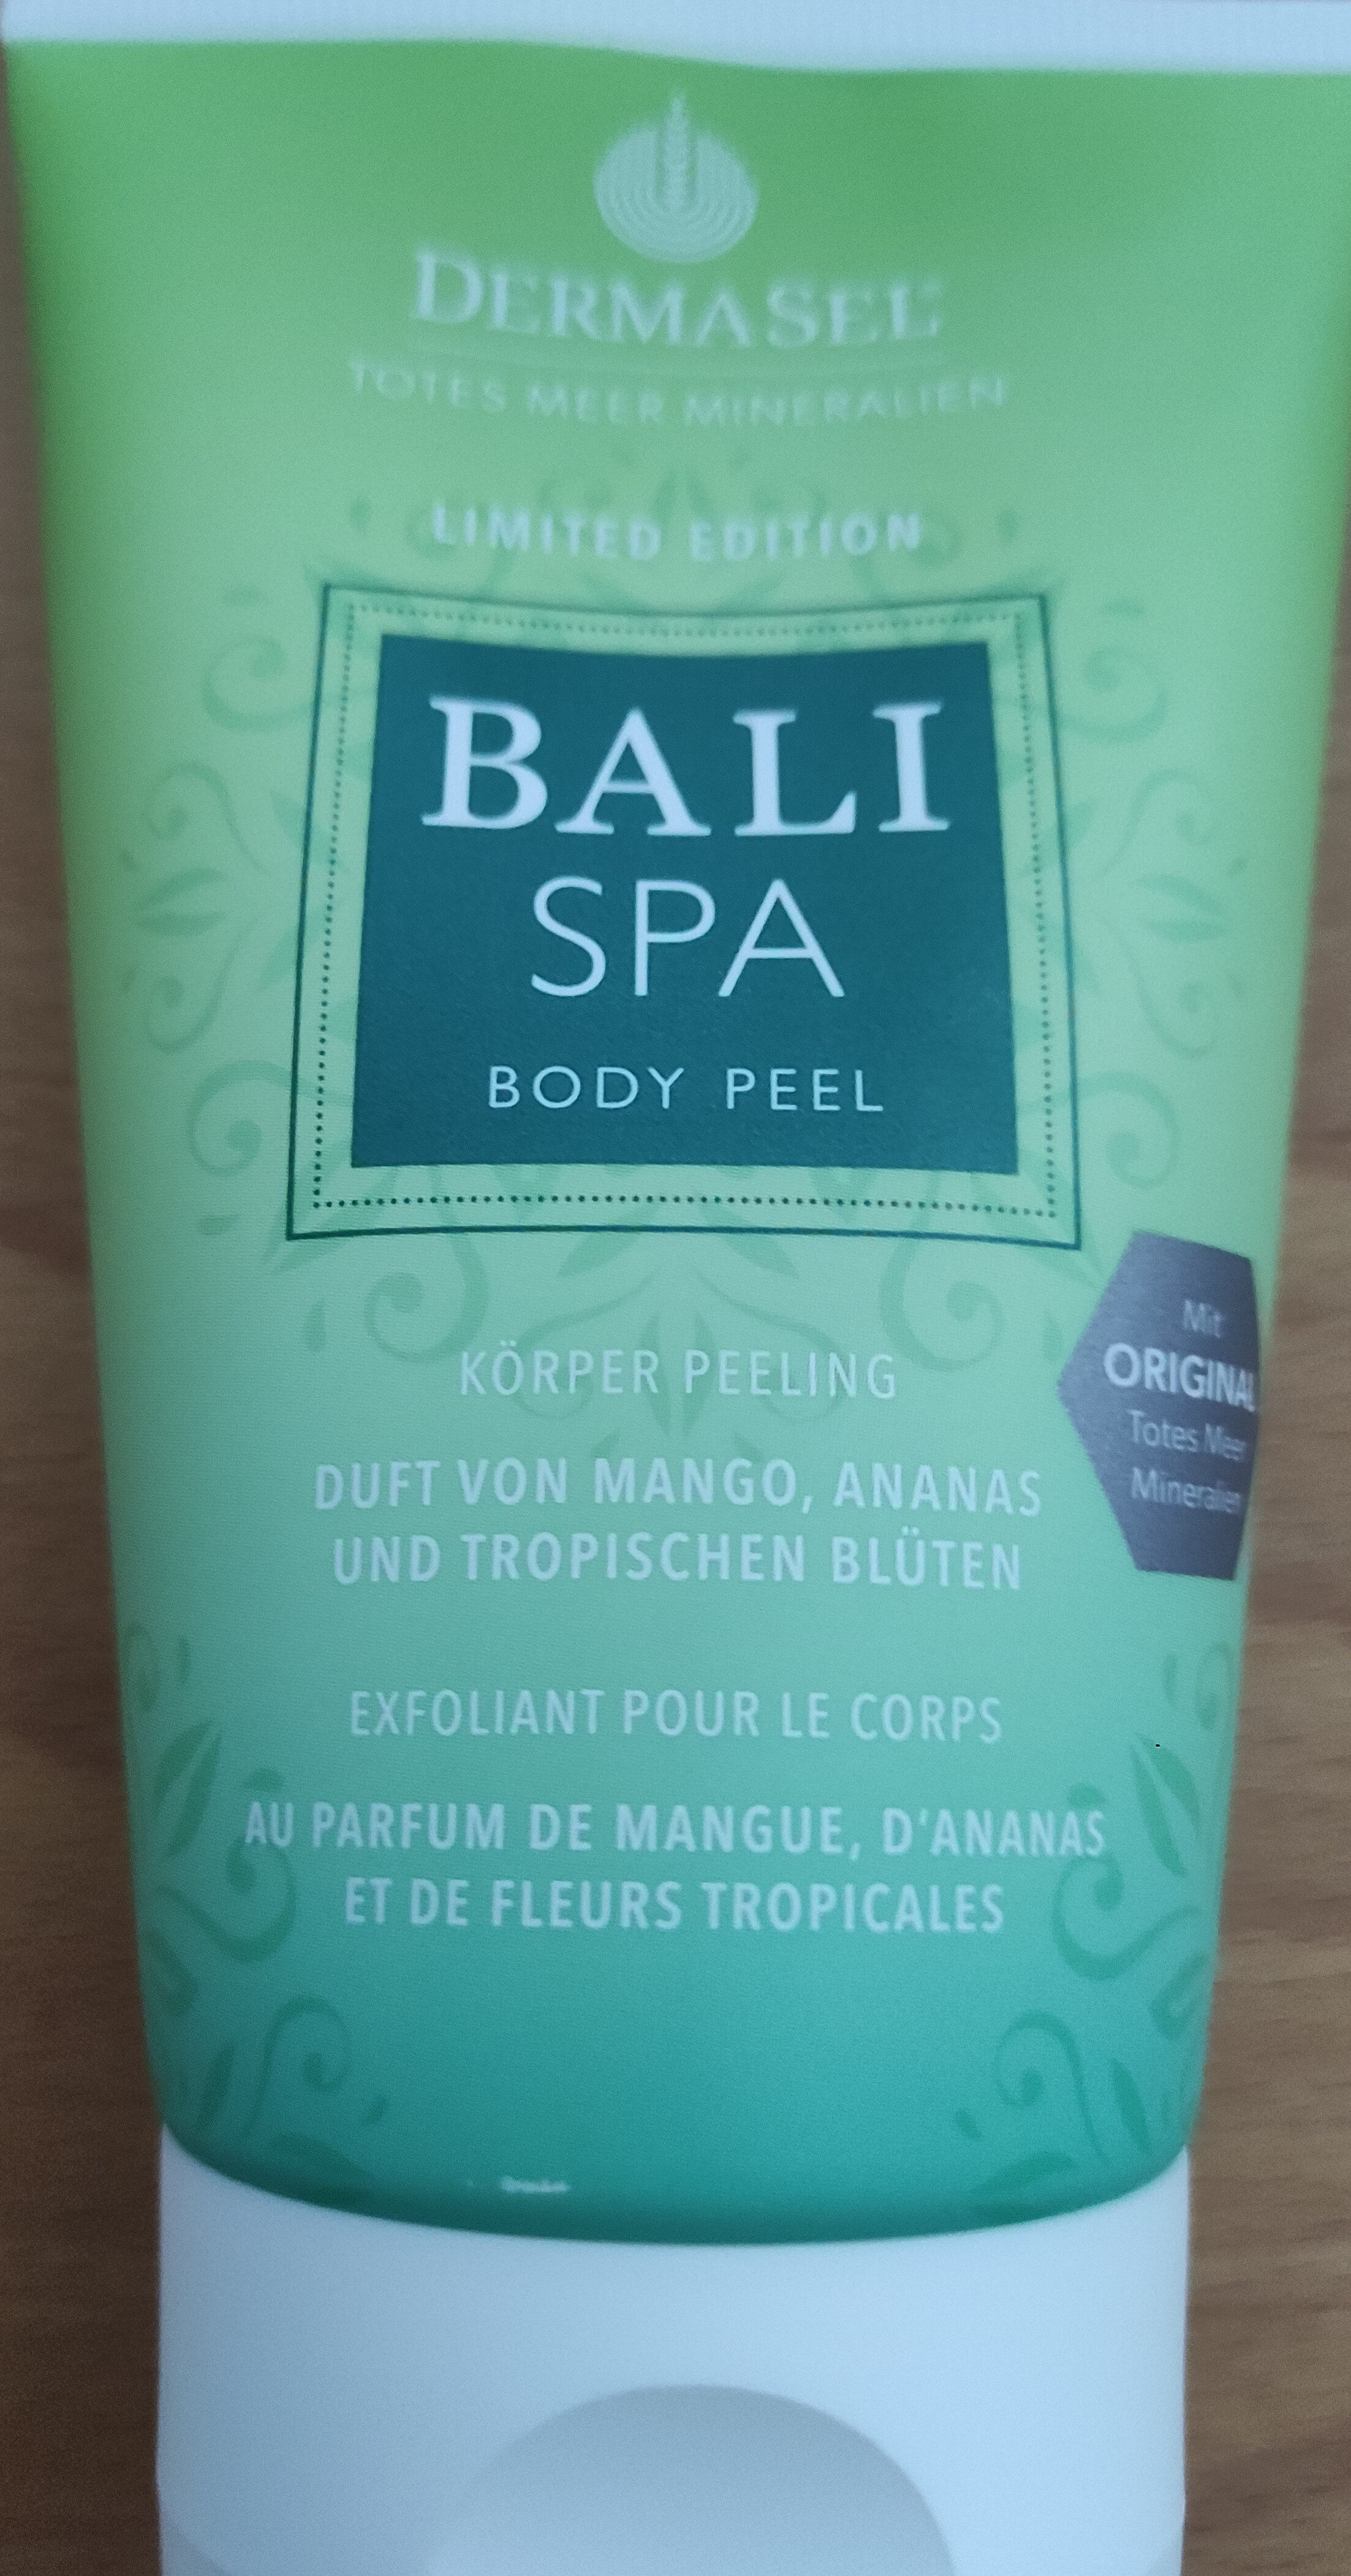 Dermasel Bali Spa Body Peel Körper Peeling - Tuote - de